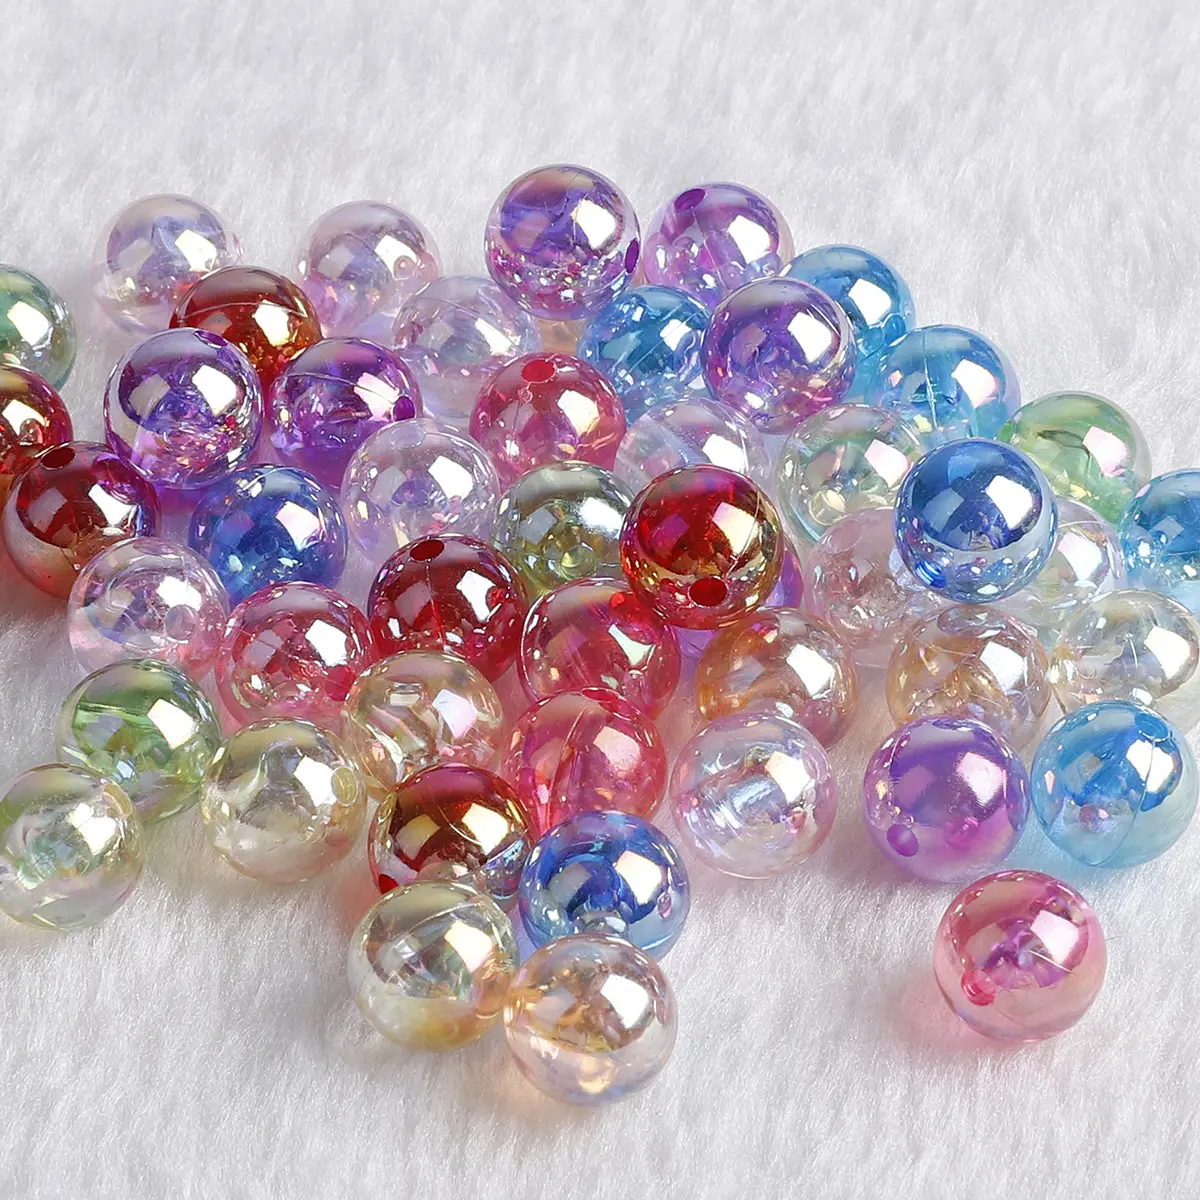 Customized Large Rainbow Color Acrylic Plastic Transparent Pendant Beads Charm Bracelet Necklace for DIY Jewelry Necklace Making